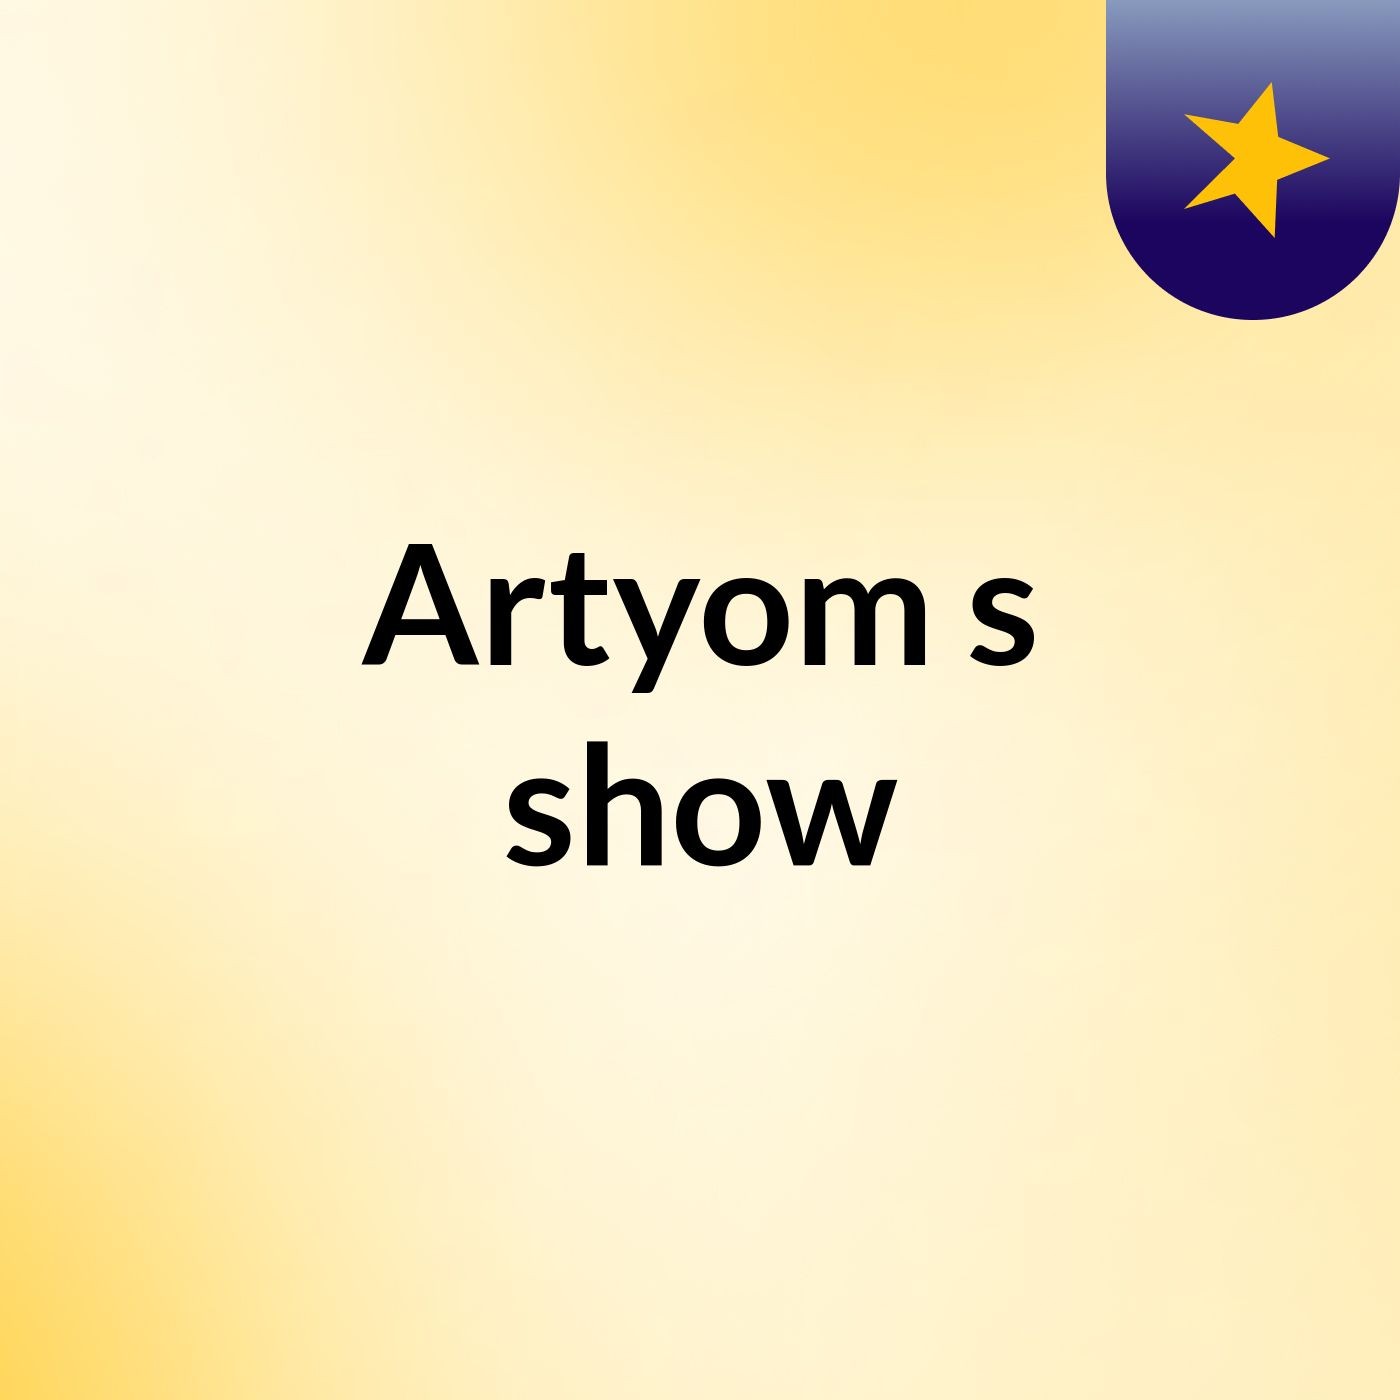 Artyom's show